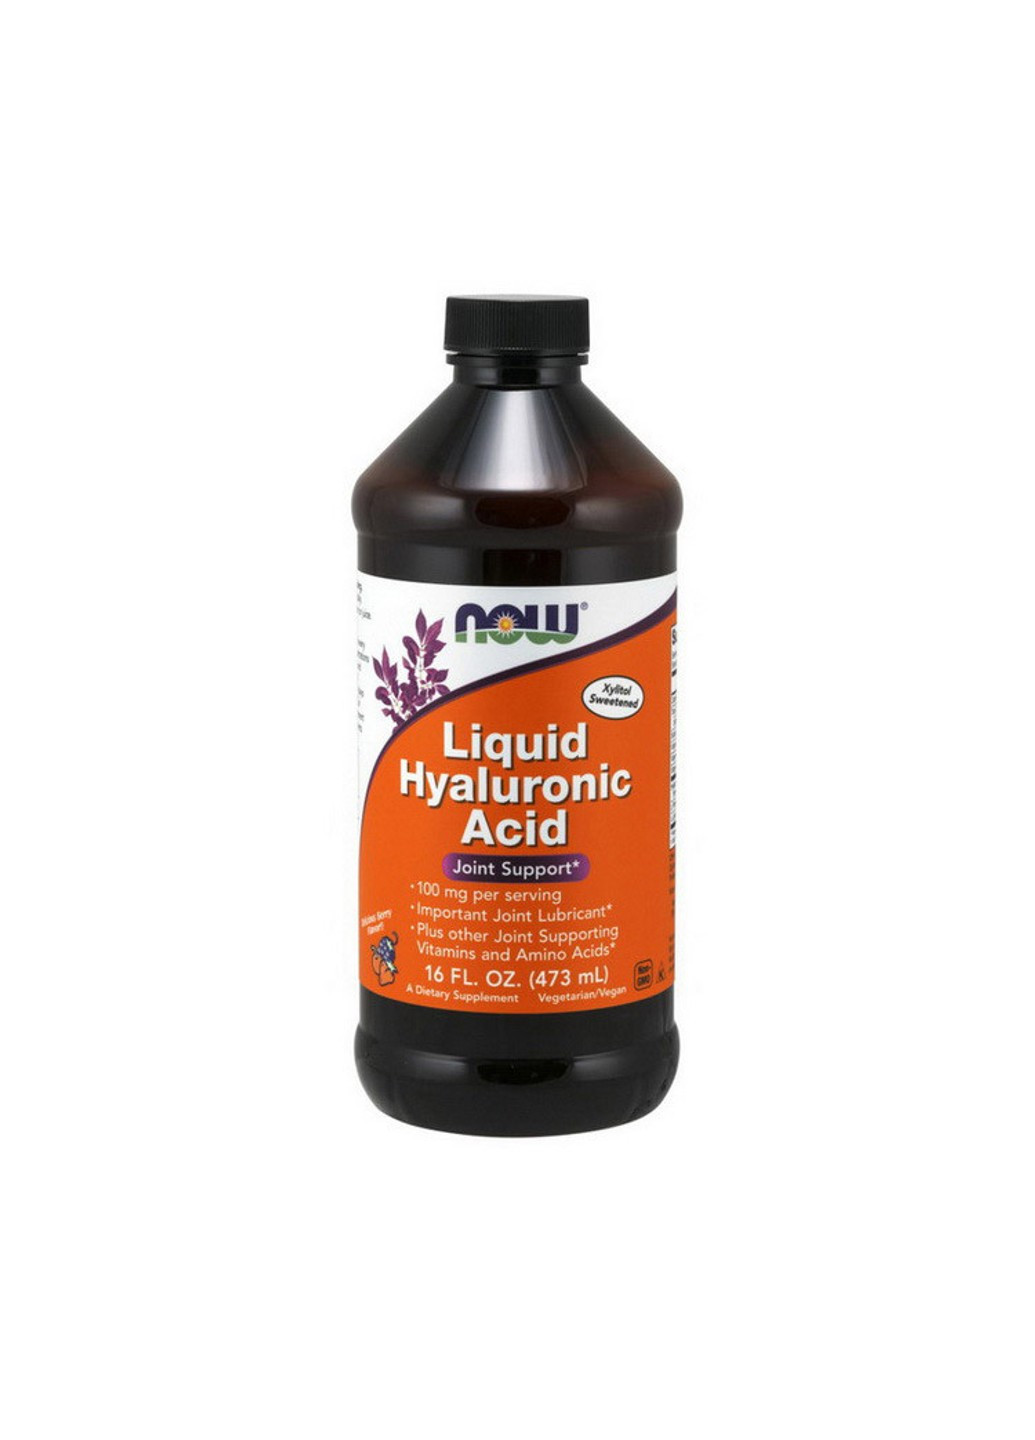 Жидкая Гиалуроновая кислота Liquid Hyaluronic Acid (473 мл) нау фудс Now Foods (255409070)